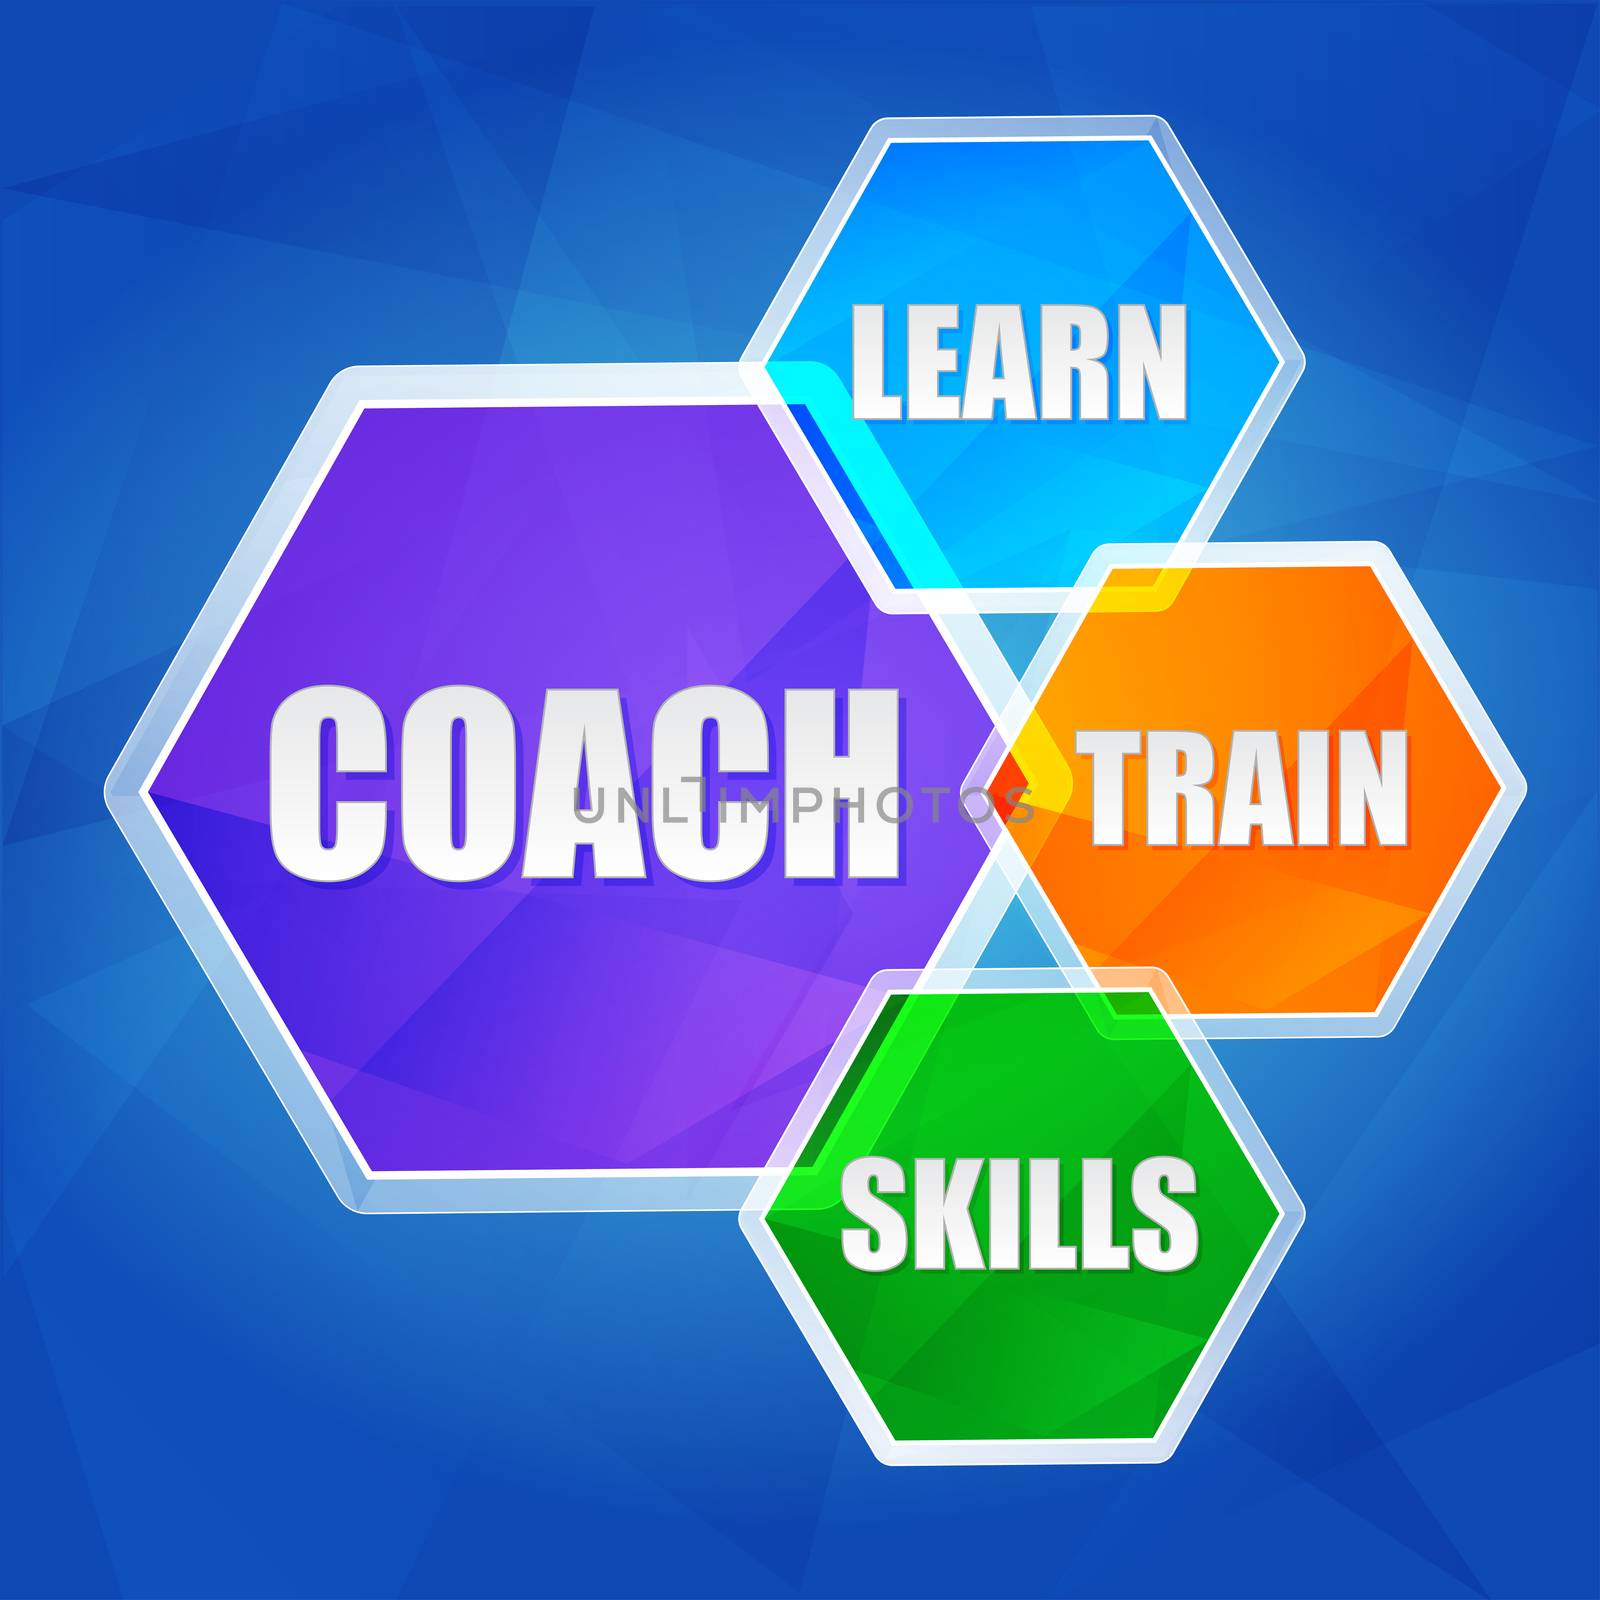 coach, learn, train, skills in hexagons, flat design by marinini